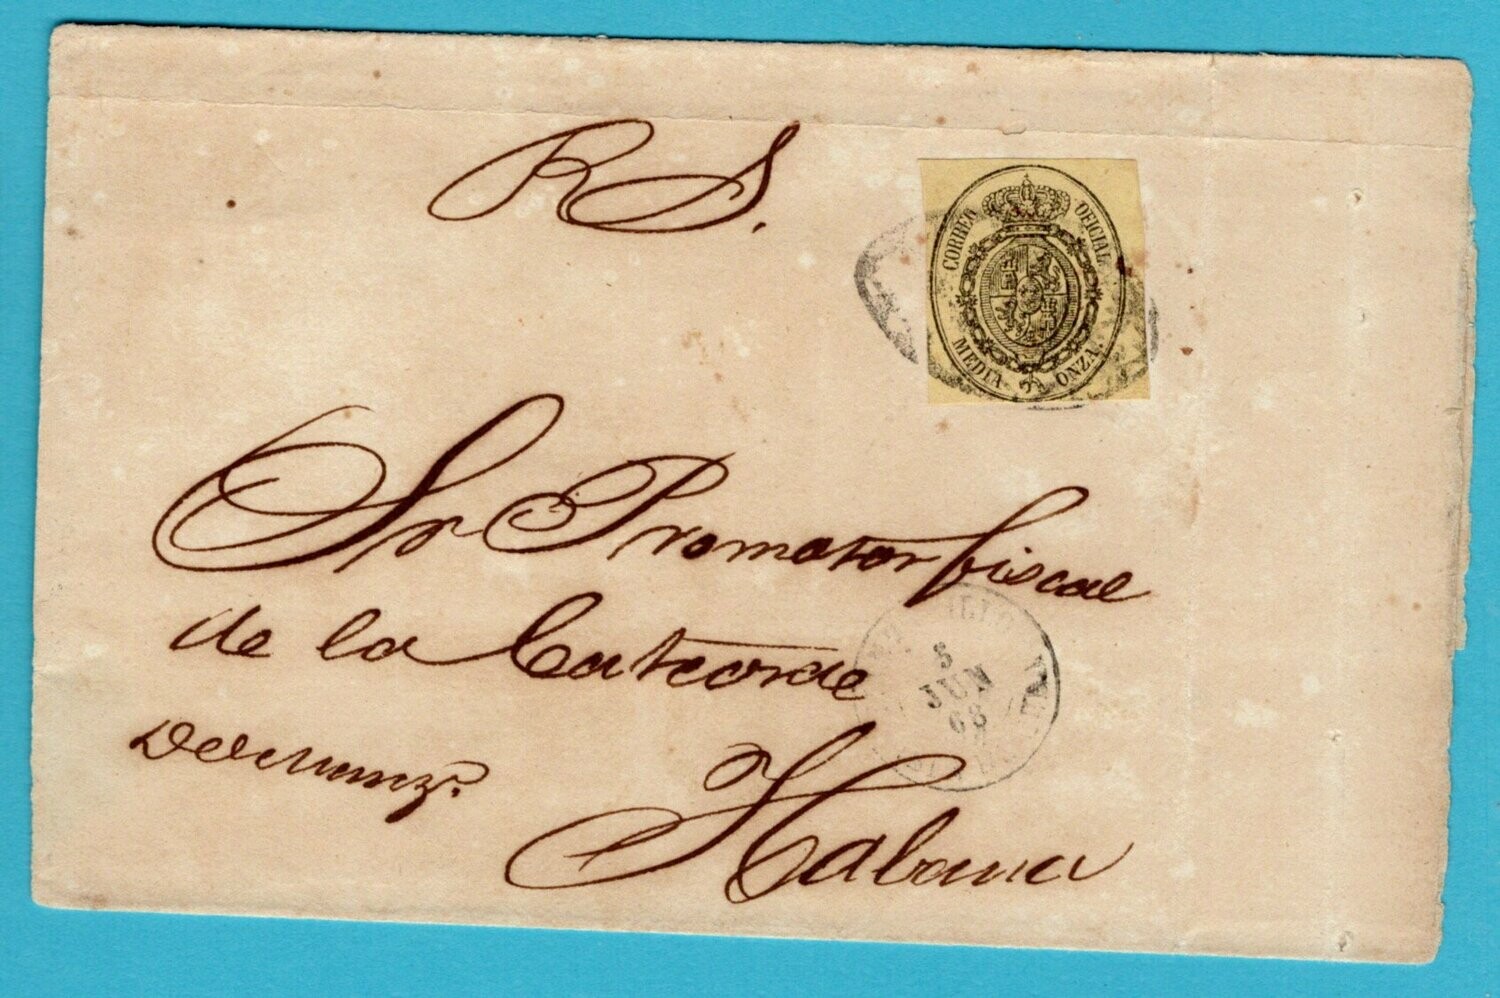 CUBA part of official document 1868